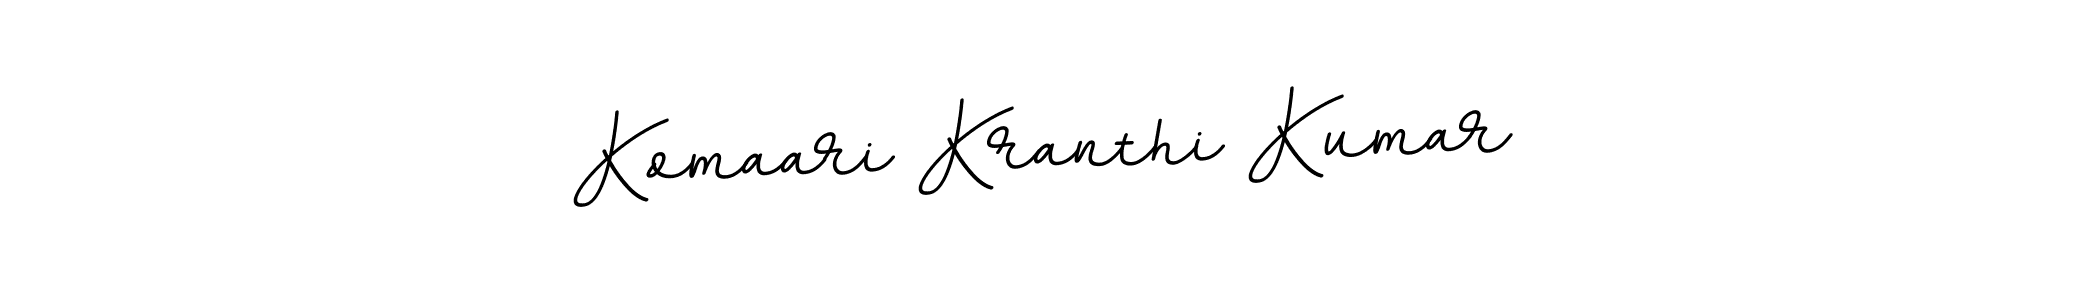 How to make Komaari Kranthi Kumar signature? BallpointsItalic-DORy9 is a professional autograph style. Create handwritten signature for Komaari Kranthi Kumar name. Komaari Kranthi Kumar signature style 11 images and pictures png